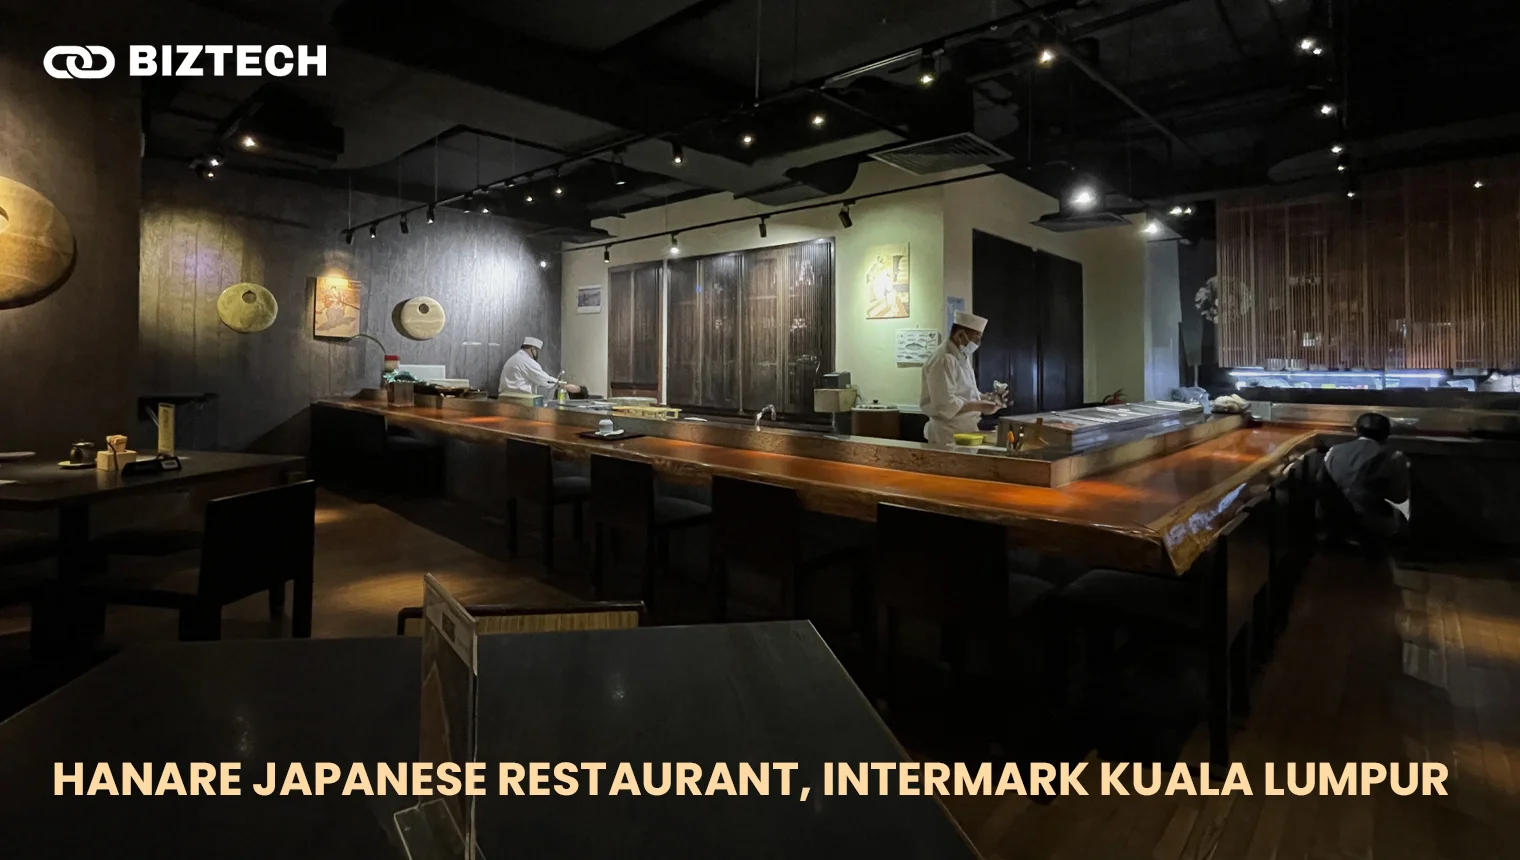 Hanare Japanese Restaurant, Intermark Kuala Lumpur